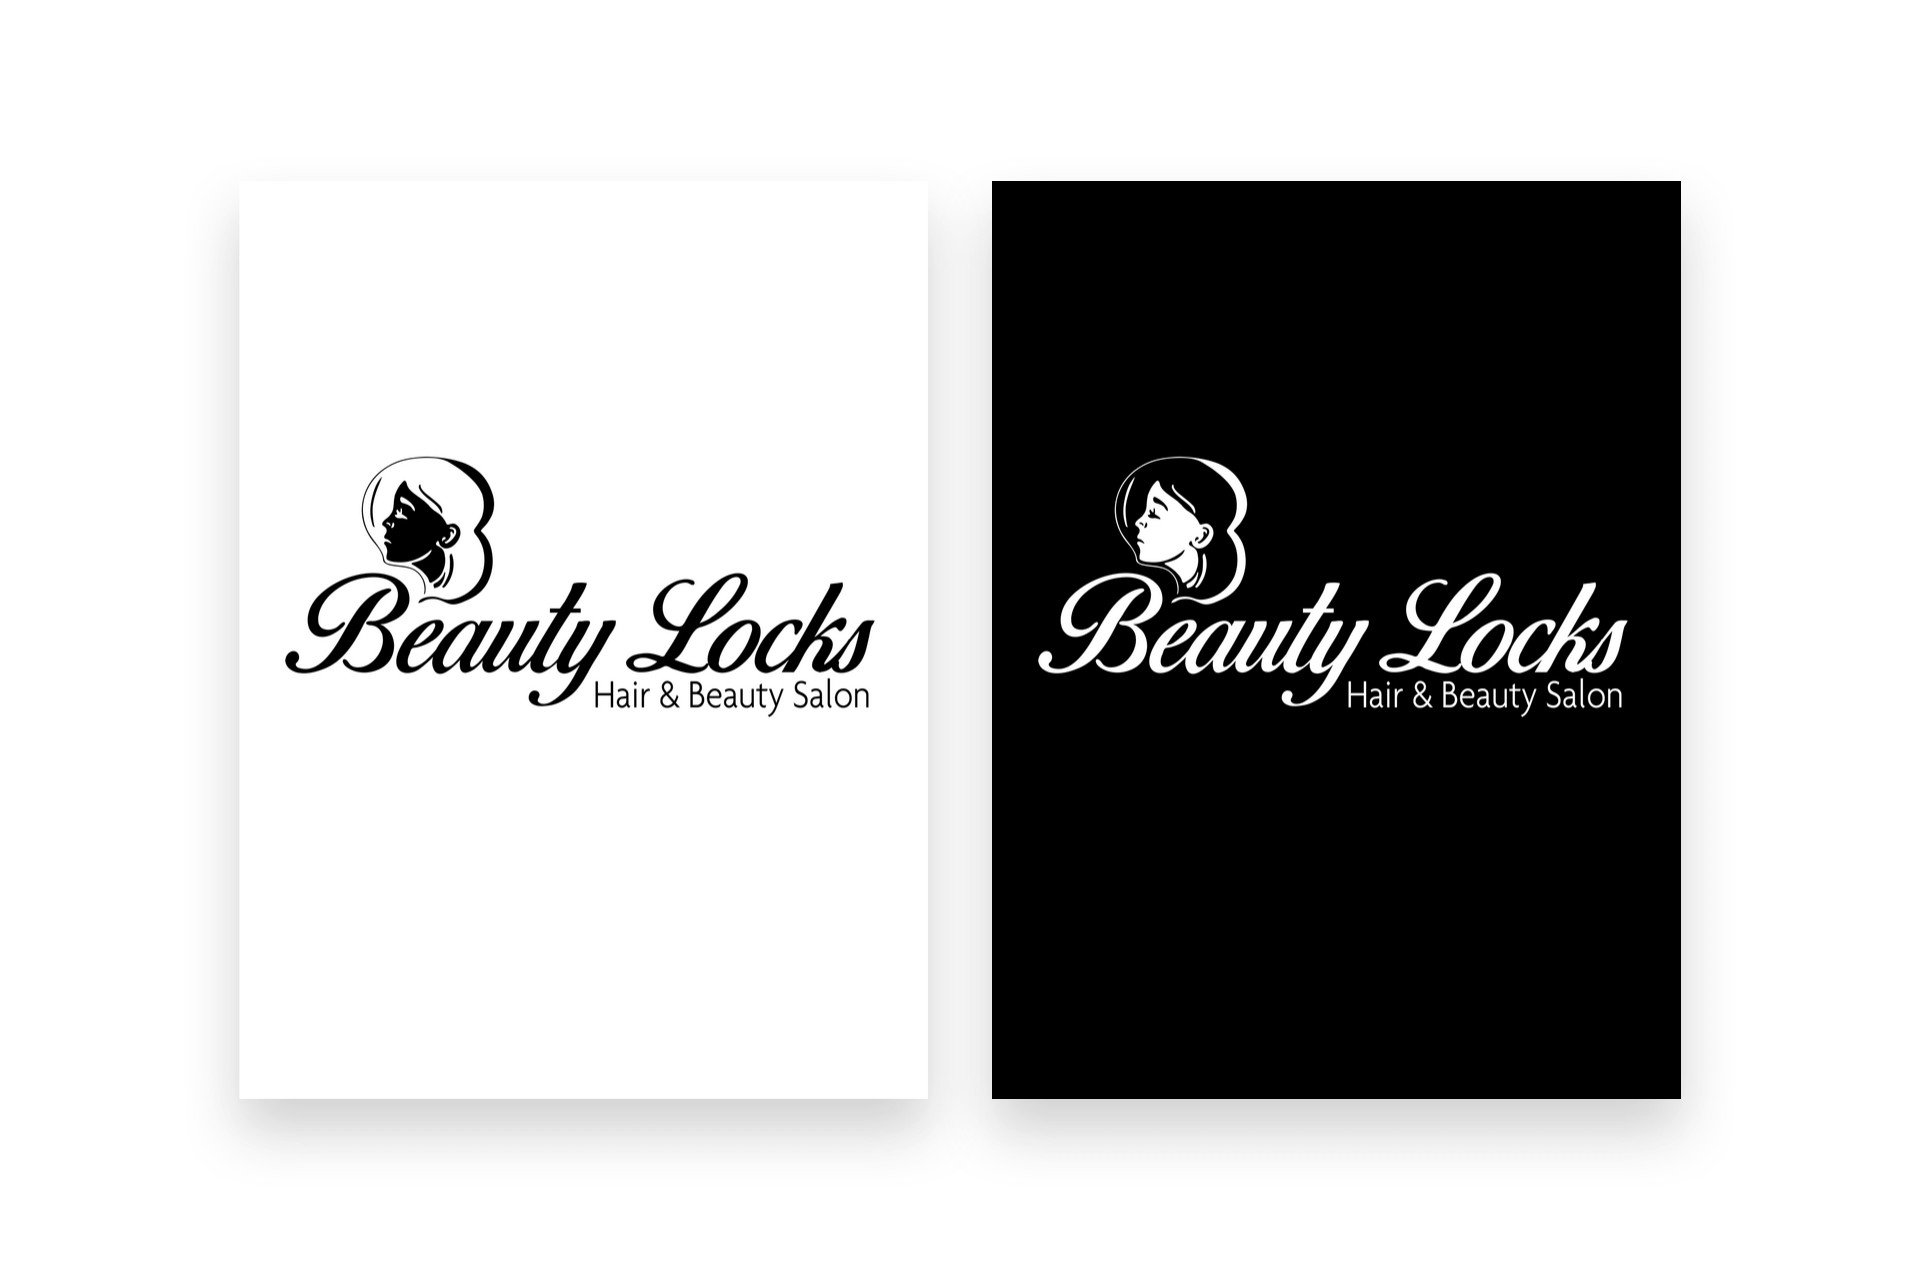 Beauty Locks Black and white logo design